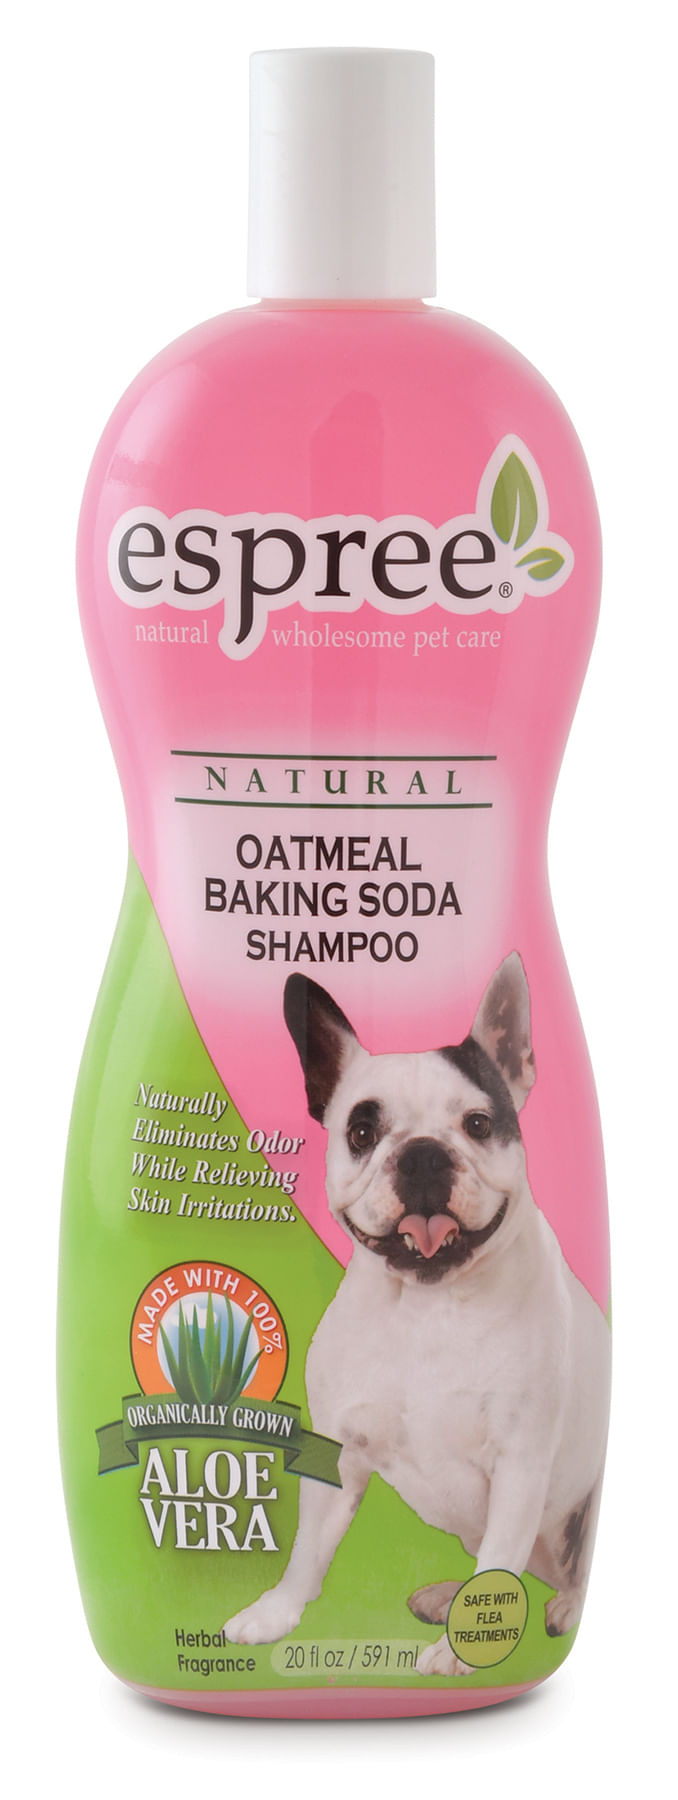 Espree-Oatmeal-Baking-Soda-Shampoo